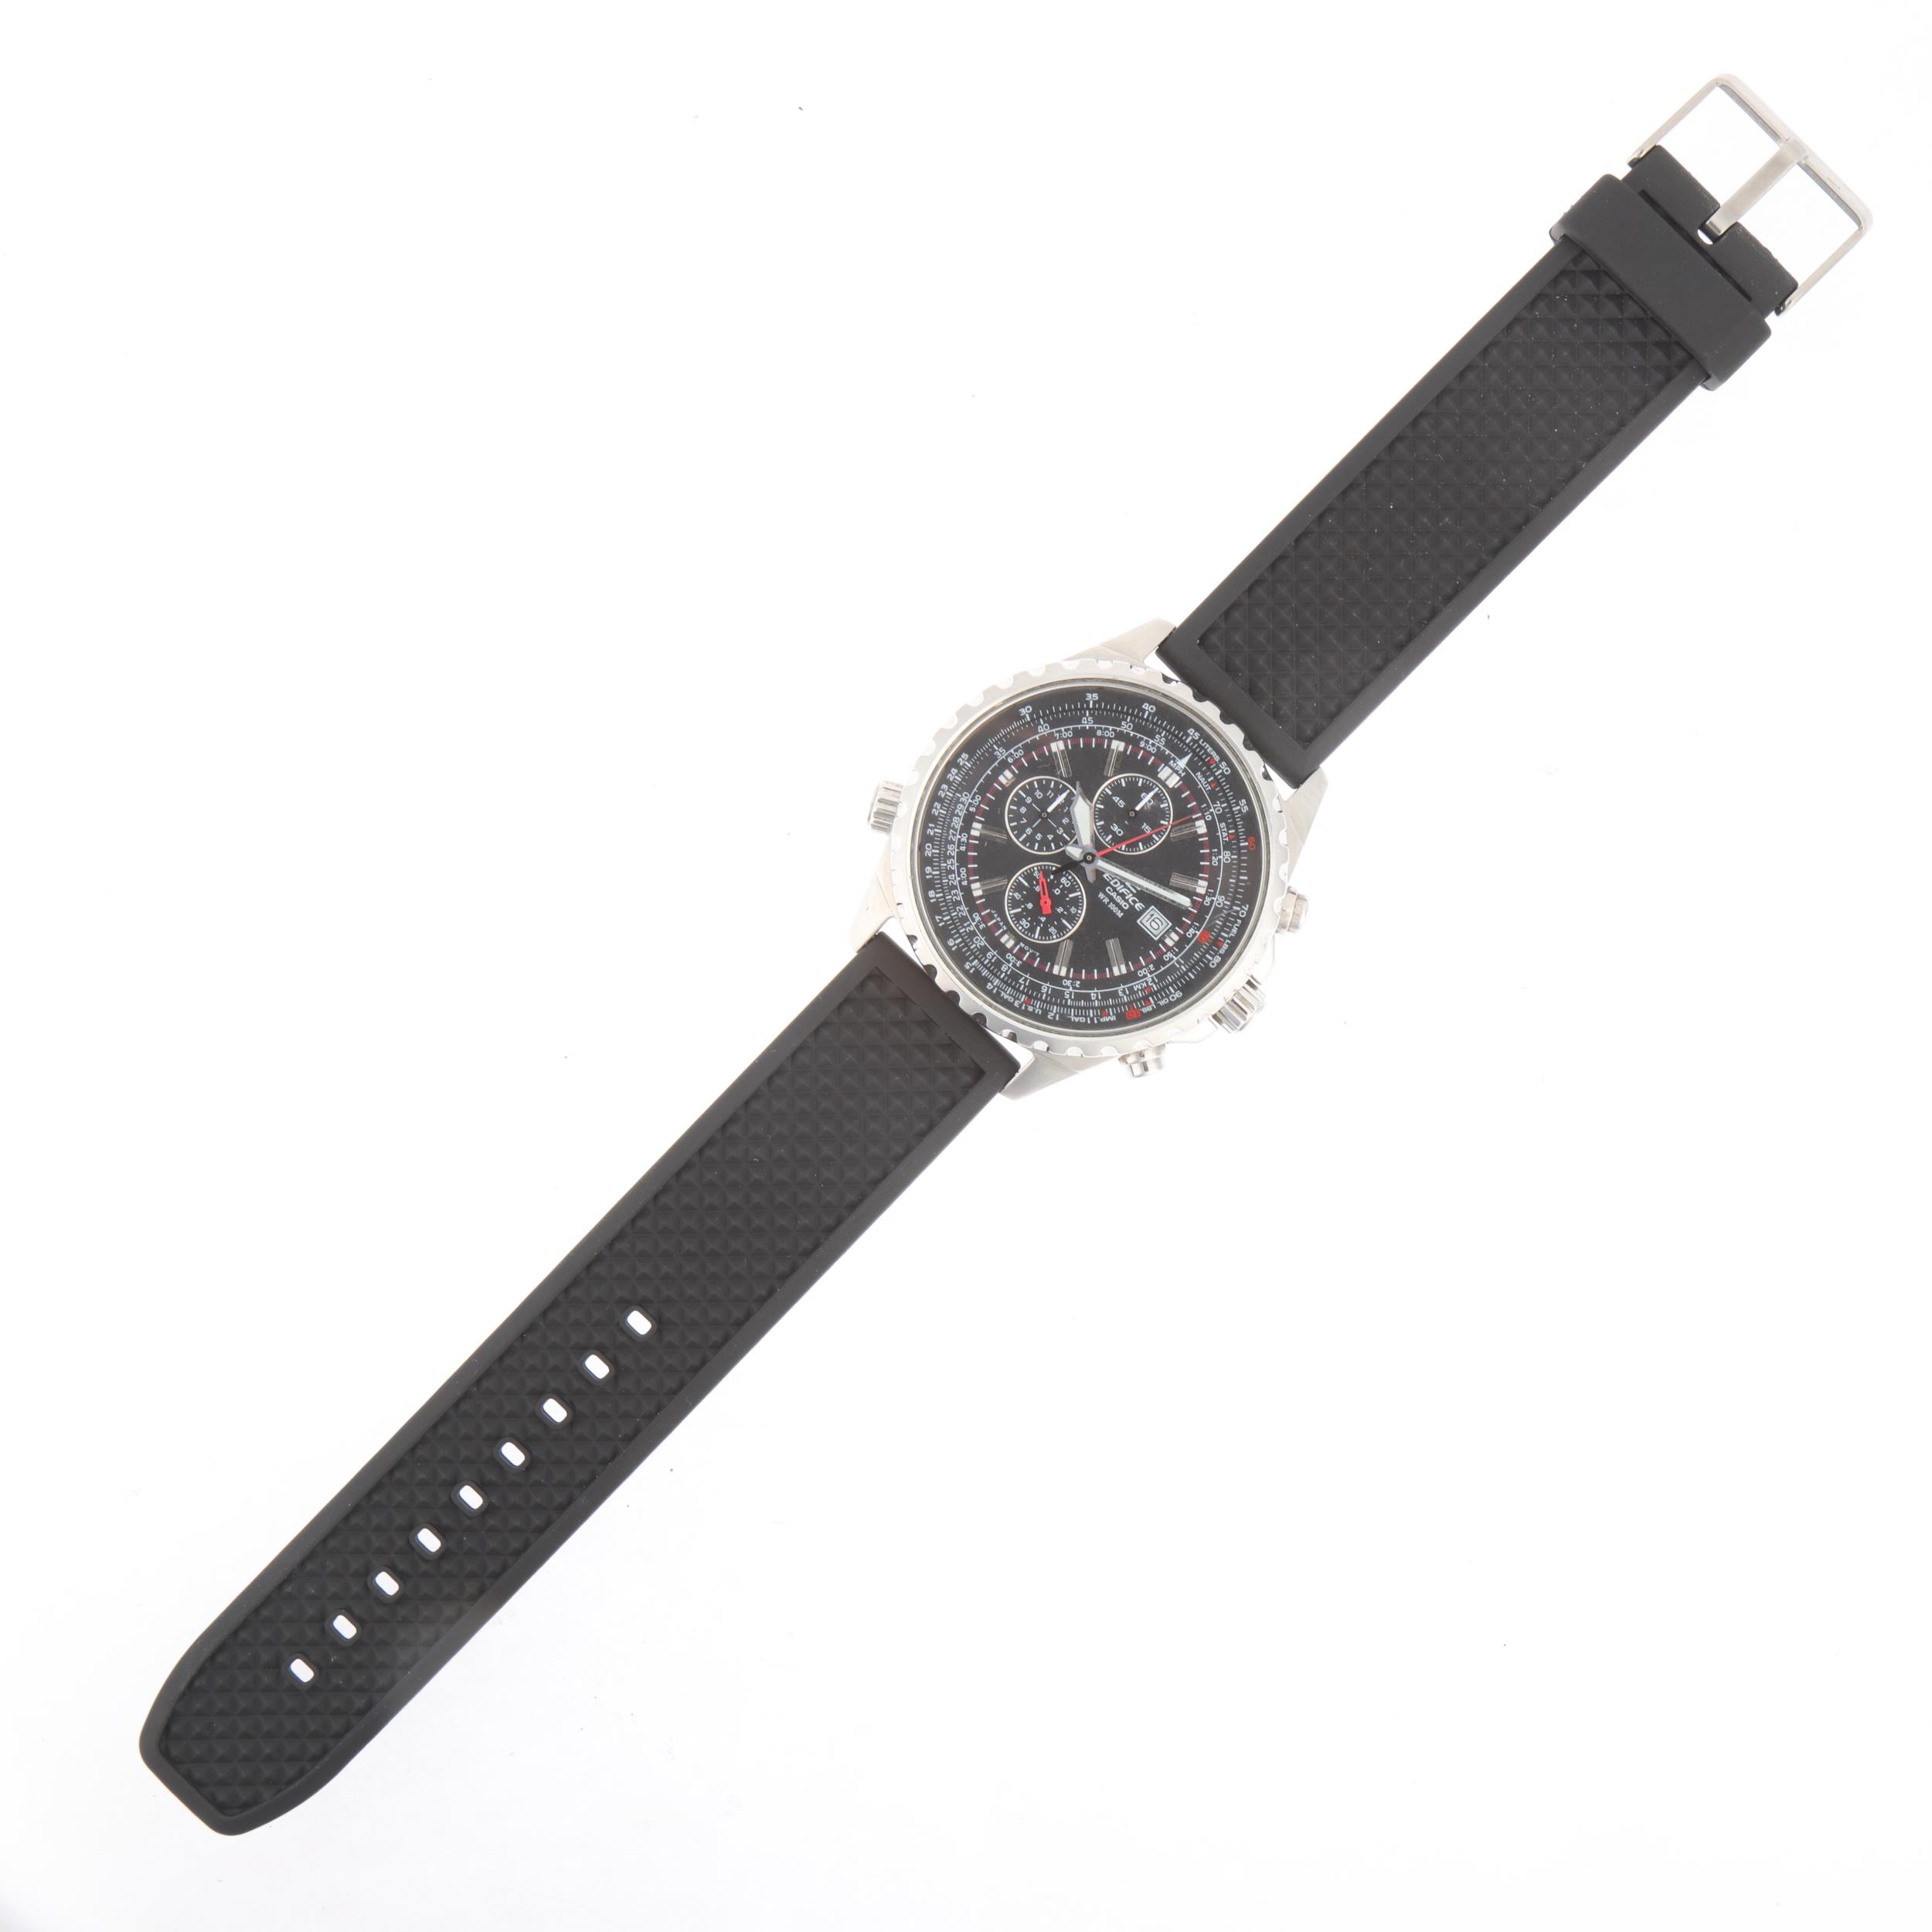 CASIO - a stainless steel Edifice quartz chronograph calendar wristwatch, ref. EF-527, black dial - Image 2 of 5